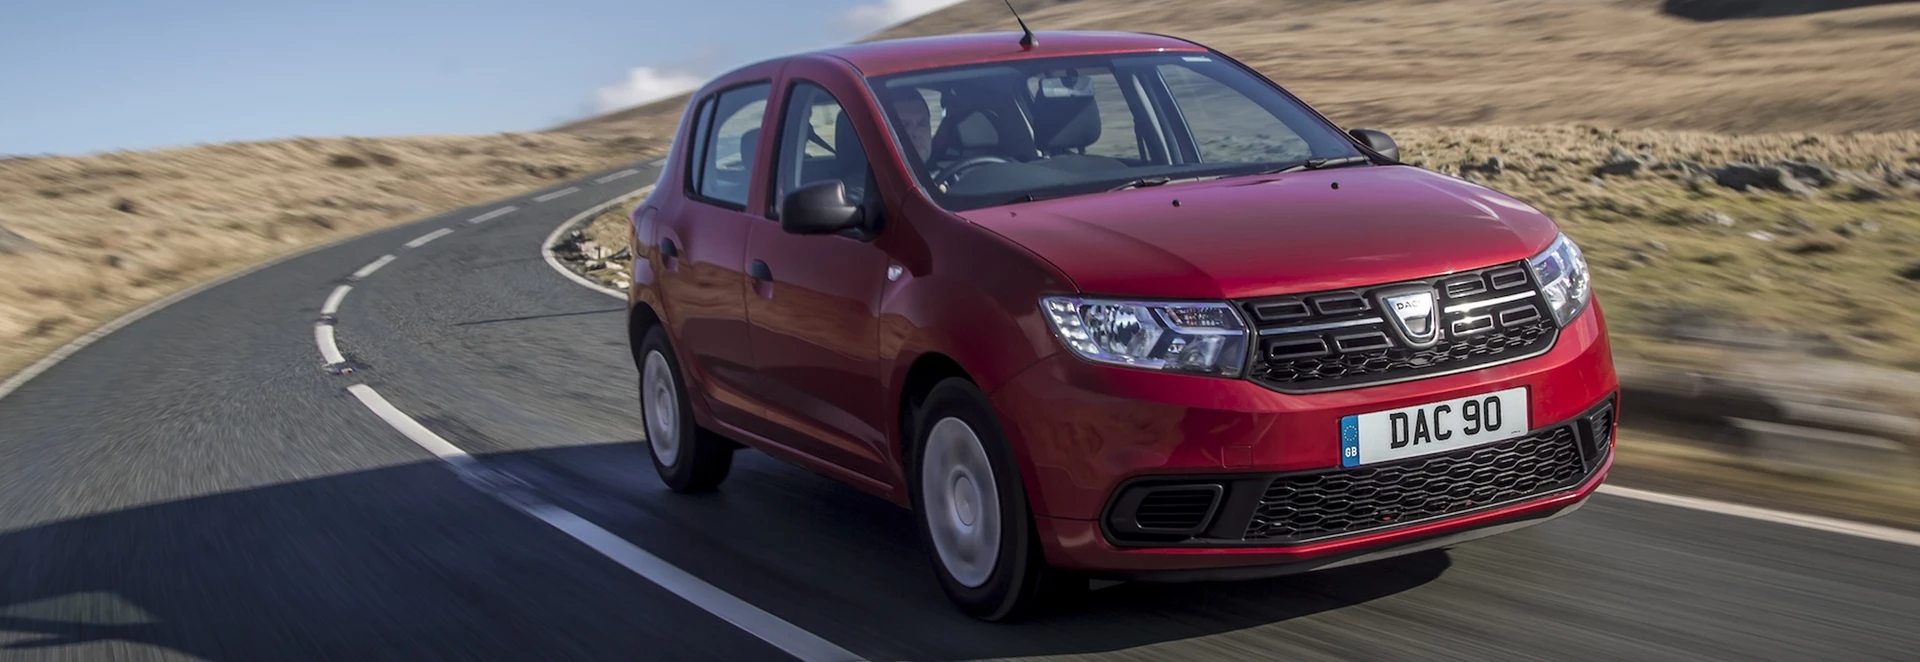 Dacia Motability Scheme: What's on offer?